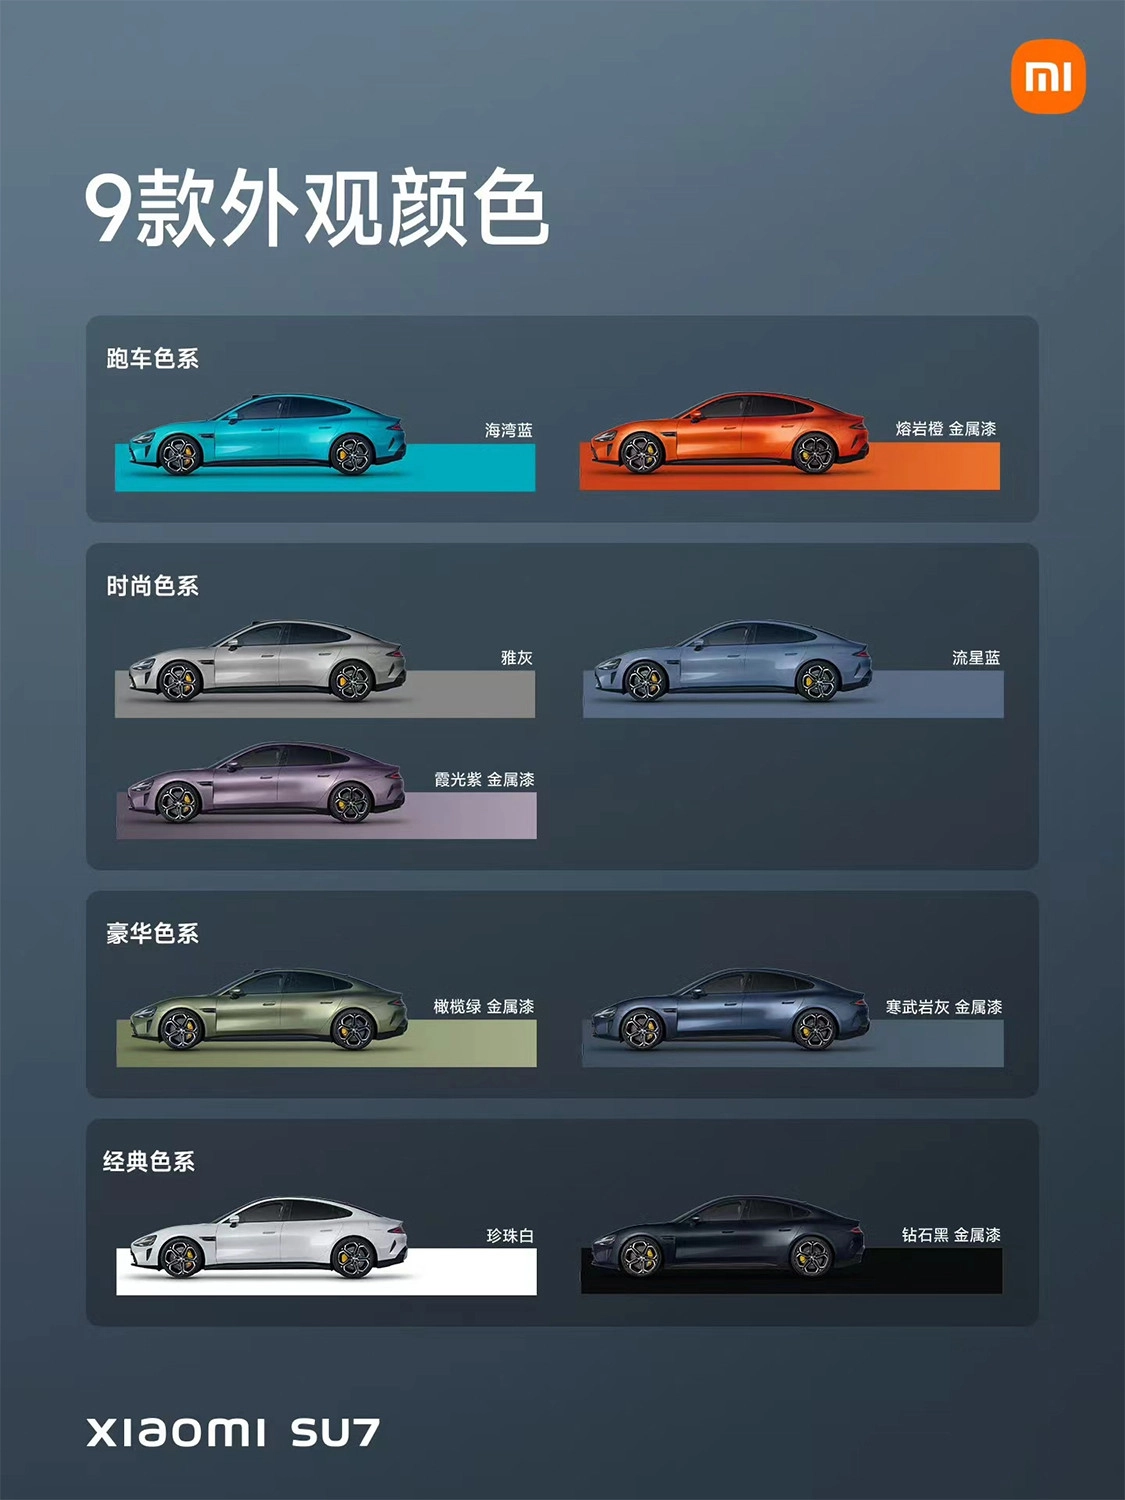 Xiaomi SU7 sở hữu 9 màu ngoại thất